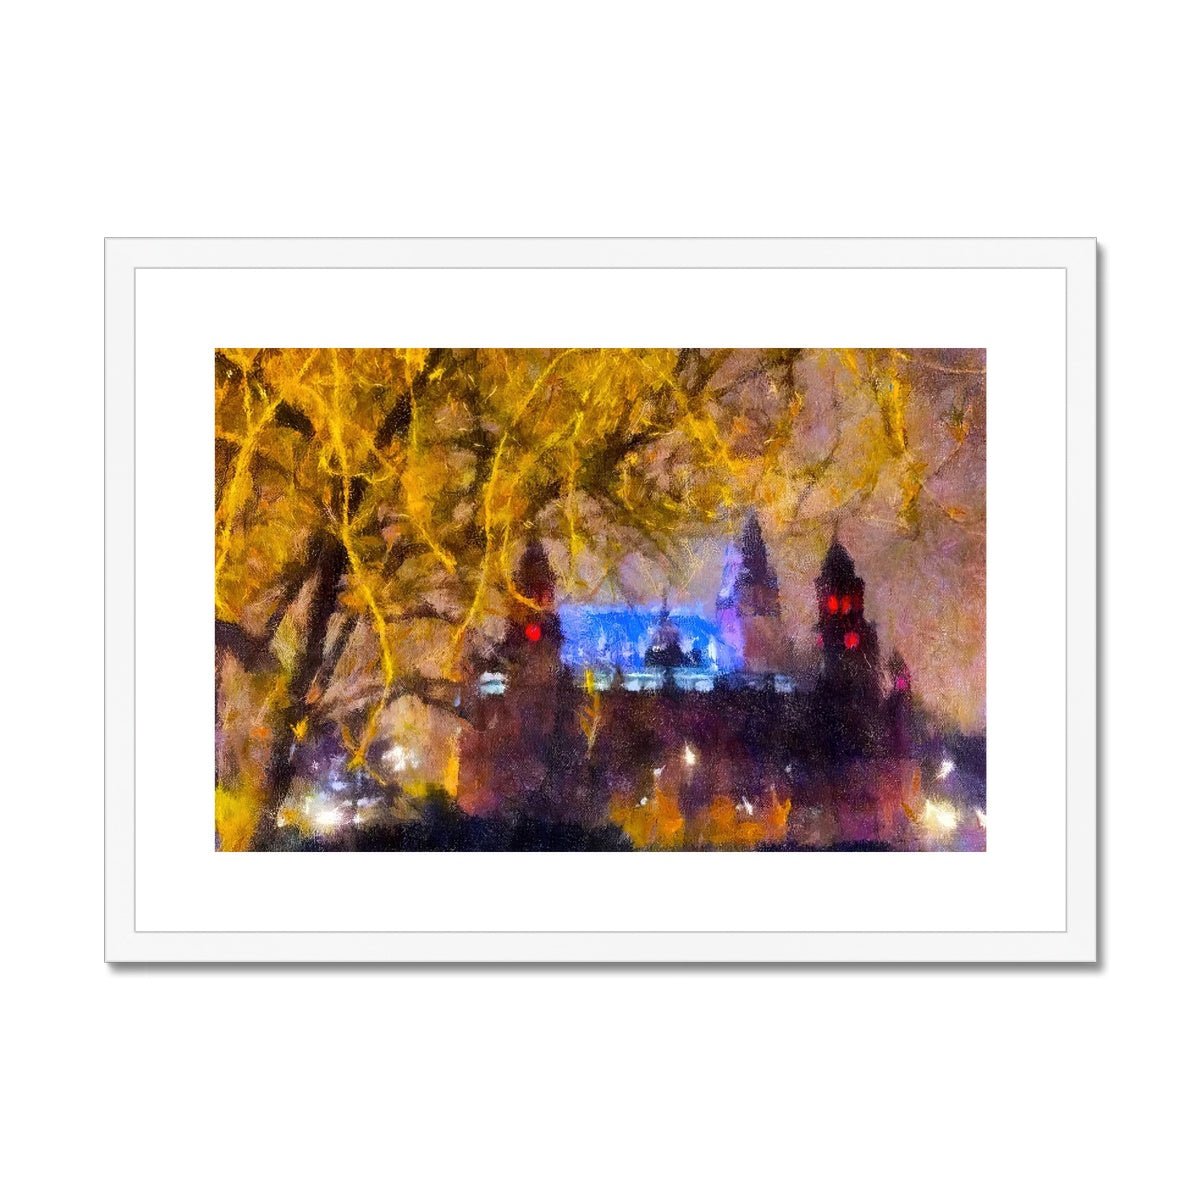 Kelvingrove Nights Painting | Framed & Mounted Prints From Scotland-Framed & Mounted Prints-Edinburgh & Glasgow Art Gallery-A2 Landscape-White Frame-Paintings, Prints, Homeware, Art Gifts From Scotland By Scottish Artist Kevin Hunter